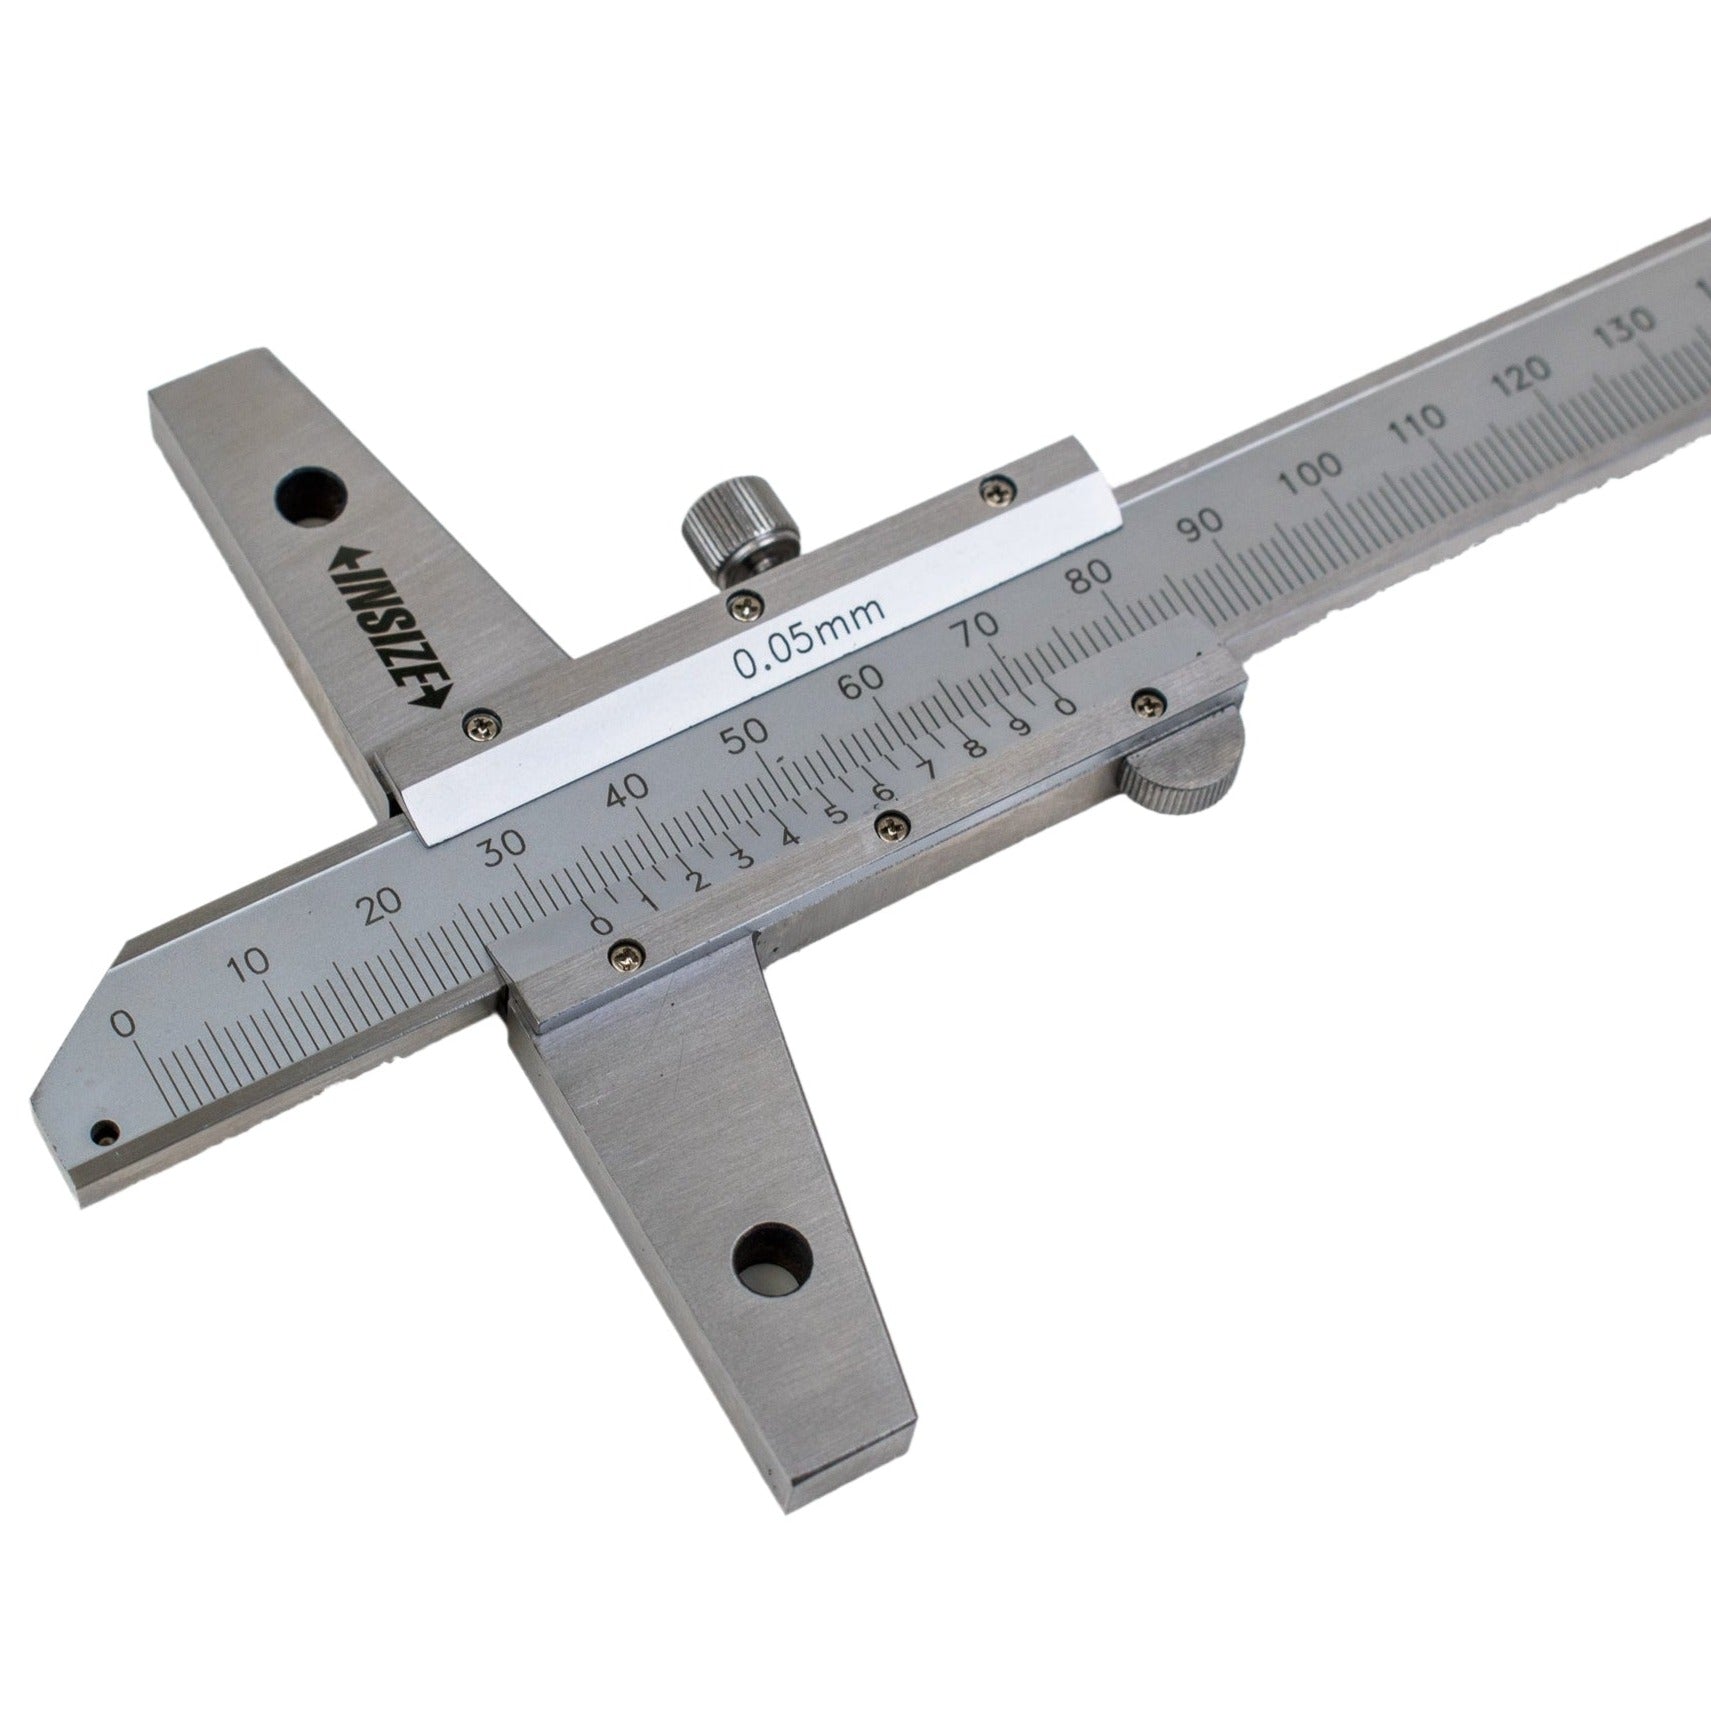 Insize Vernier Depth Gauge 0-200mm Range Series 1247-200